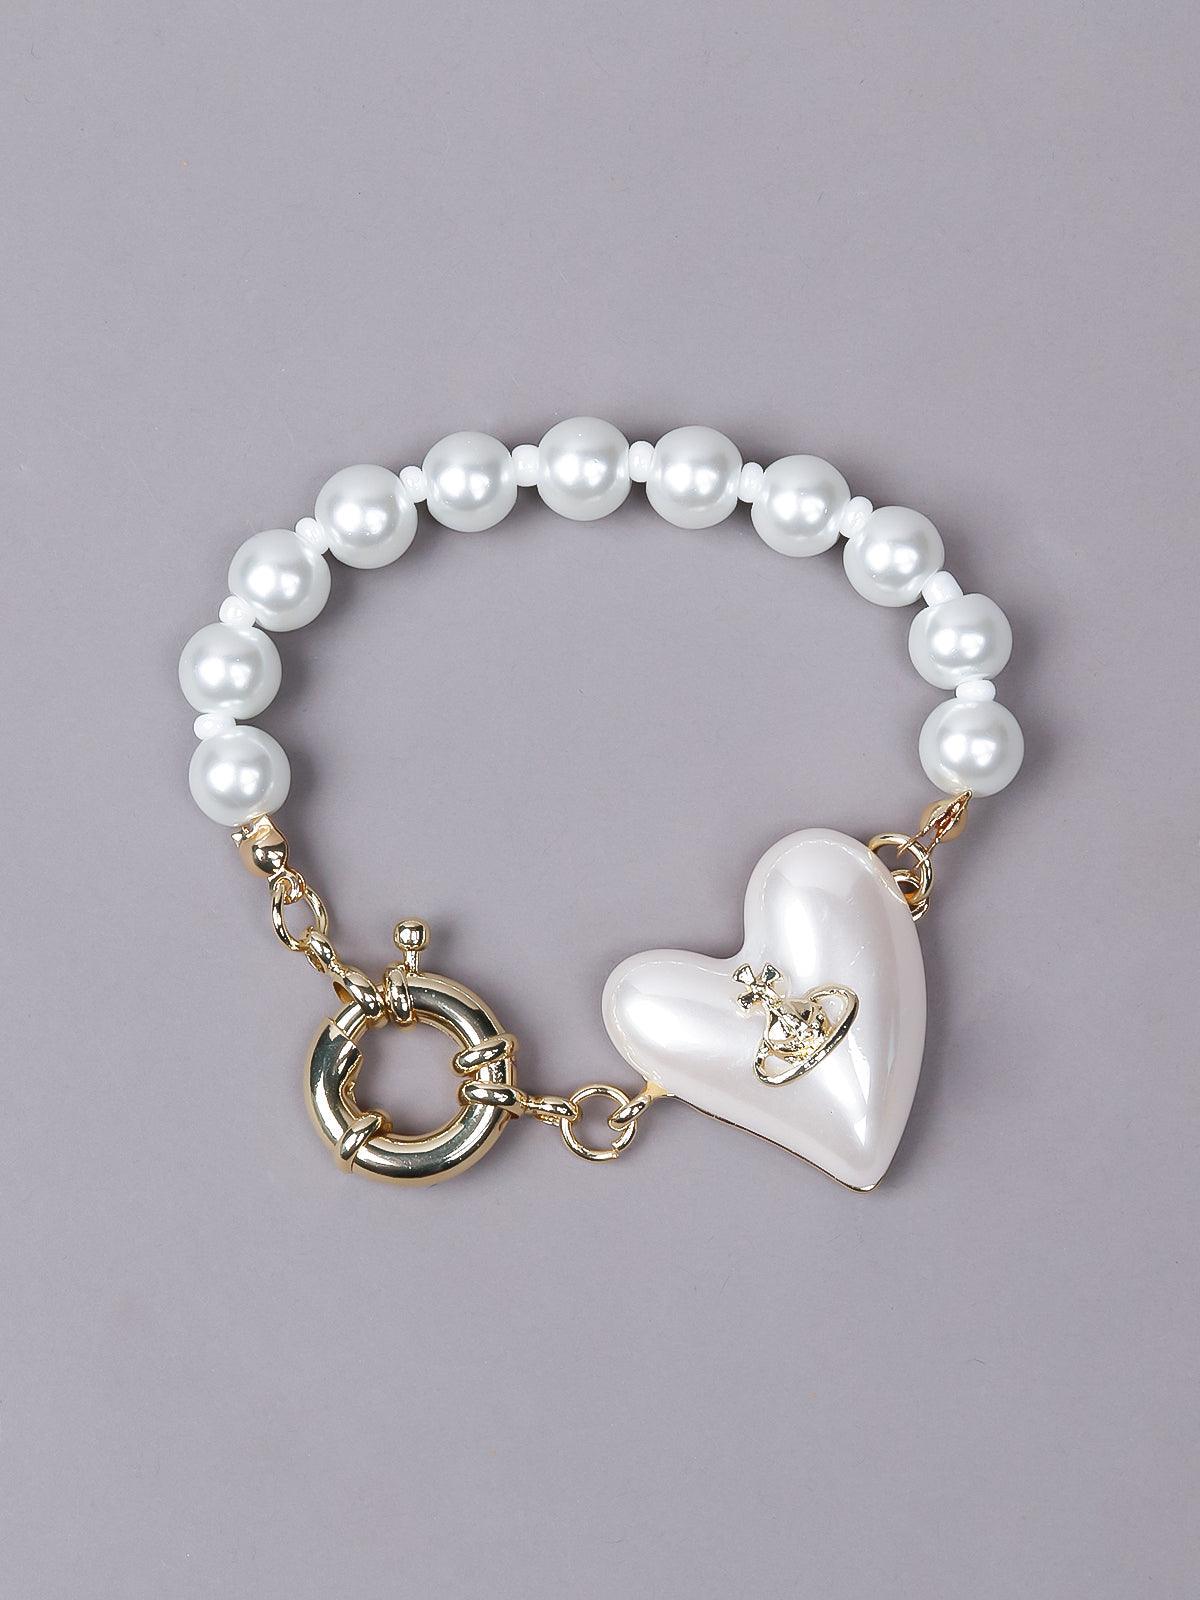 Cute pearl embellished with a heart bracelet - Odette